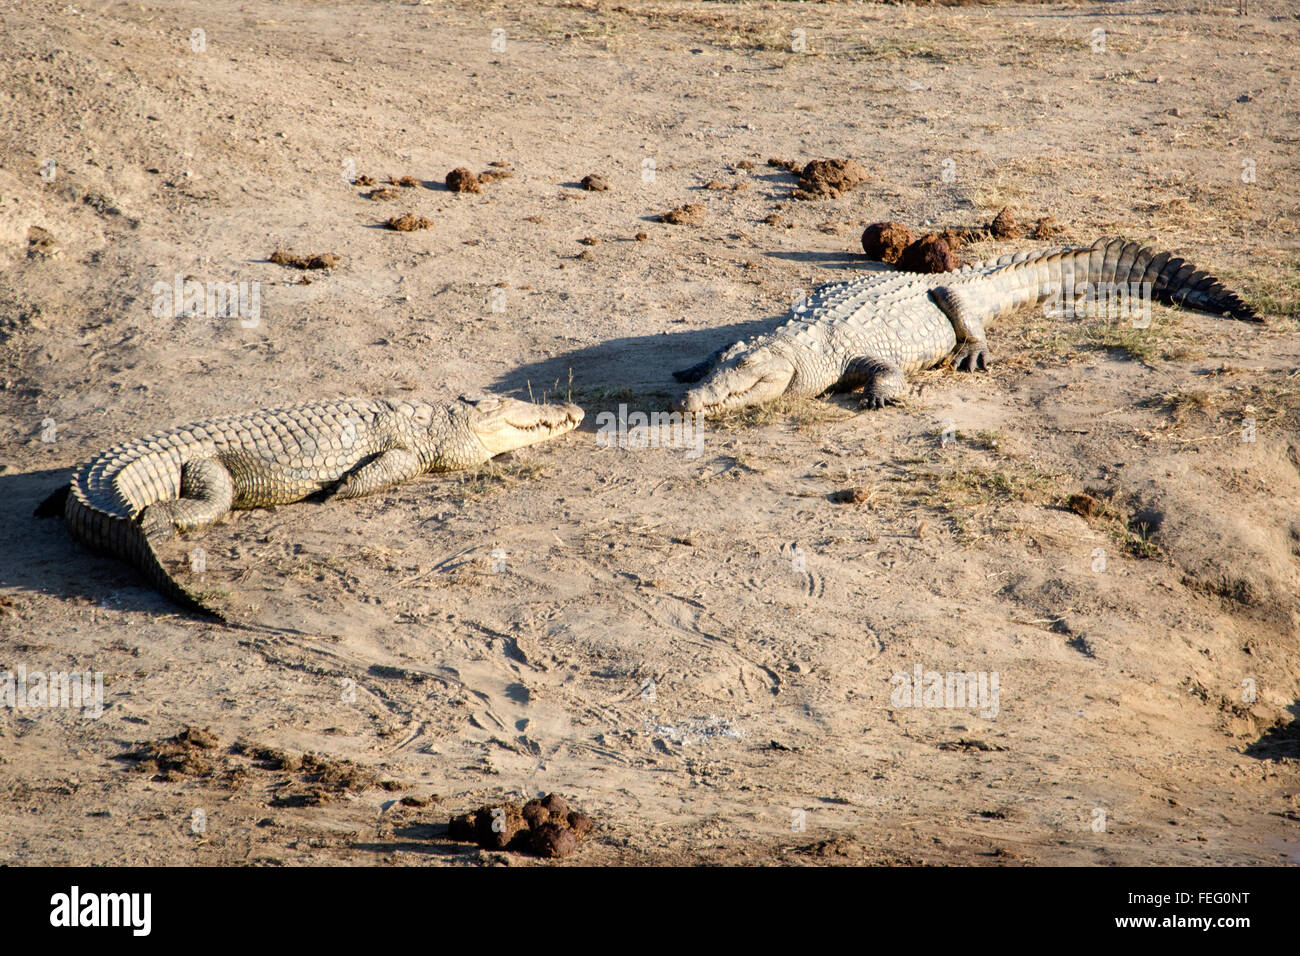 Crocodile in Zimbabwe Stock Photo